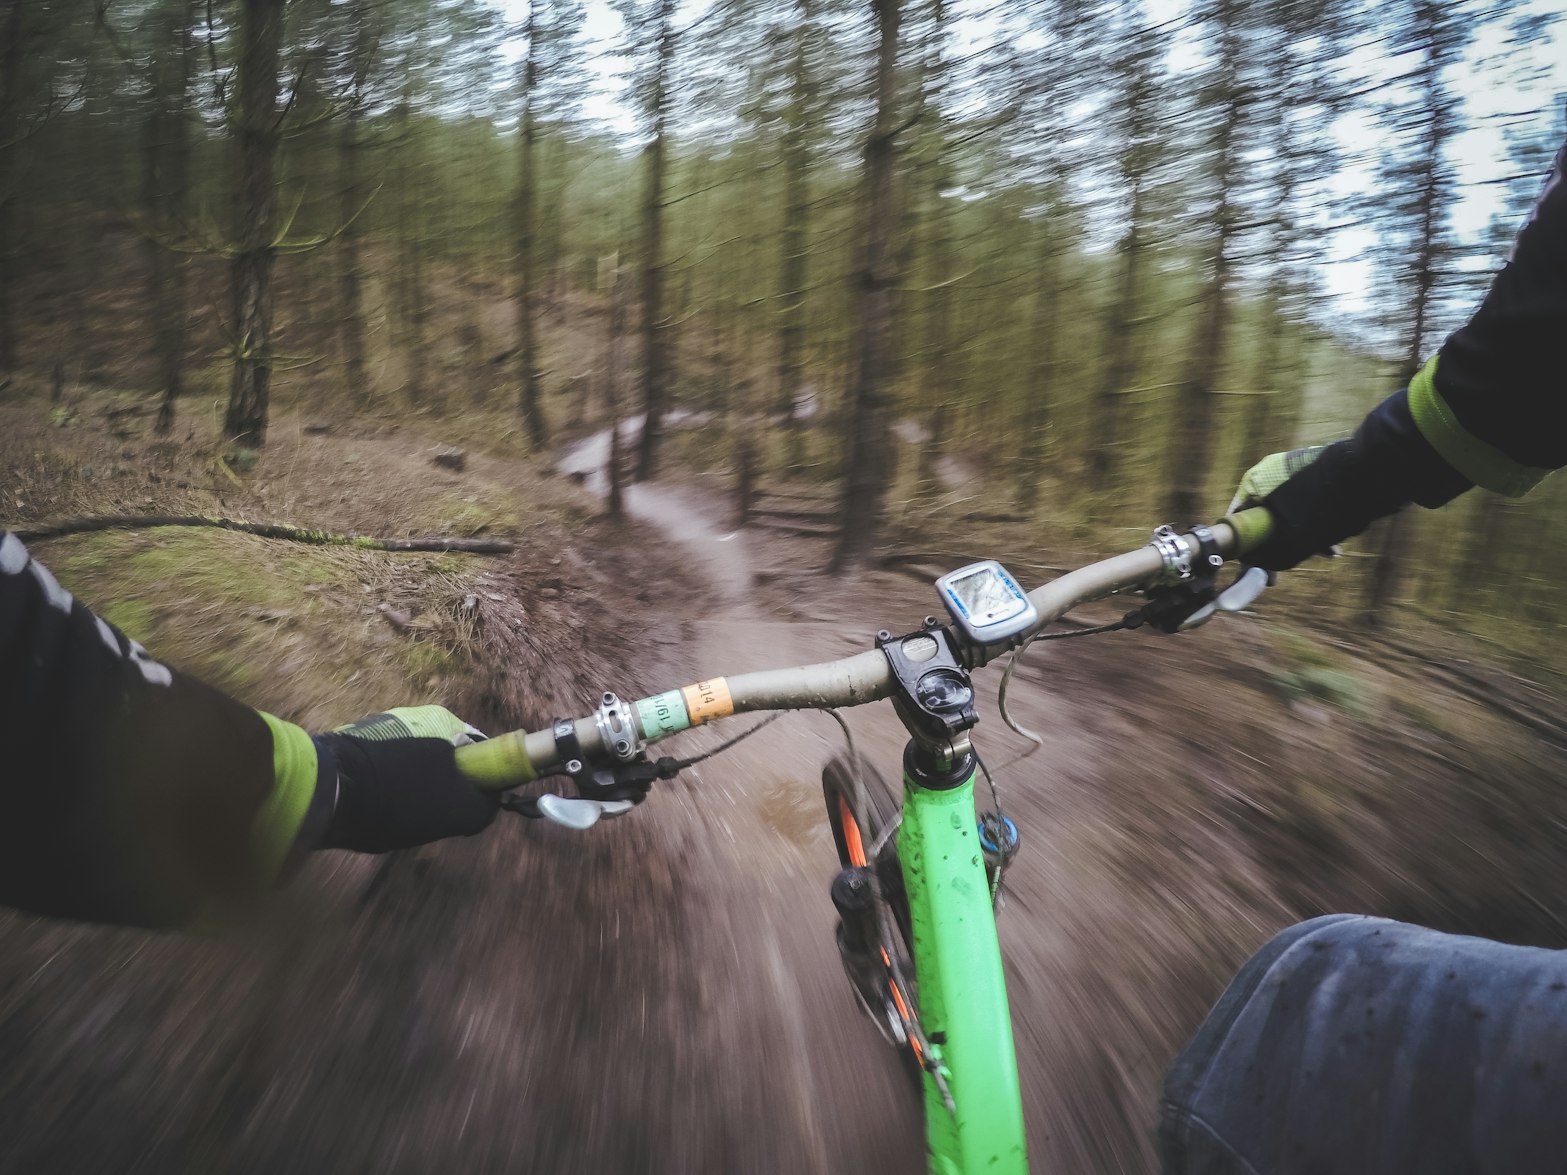 A green bike riding through the woods